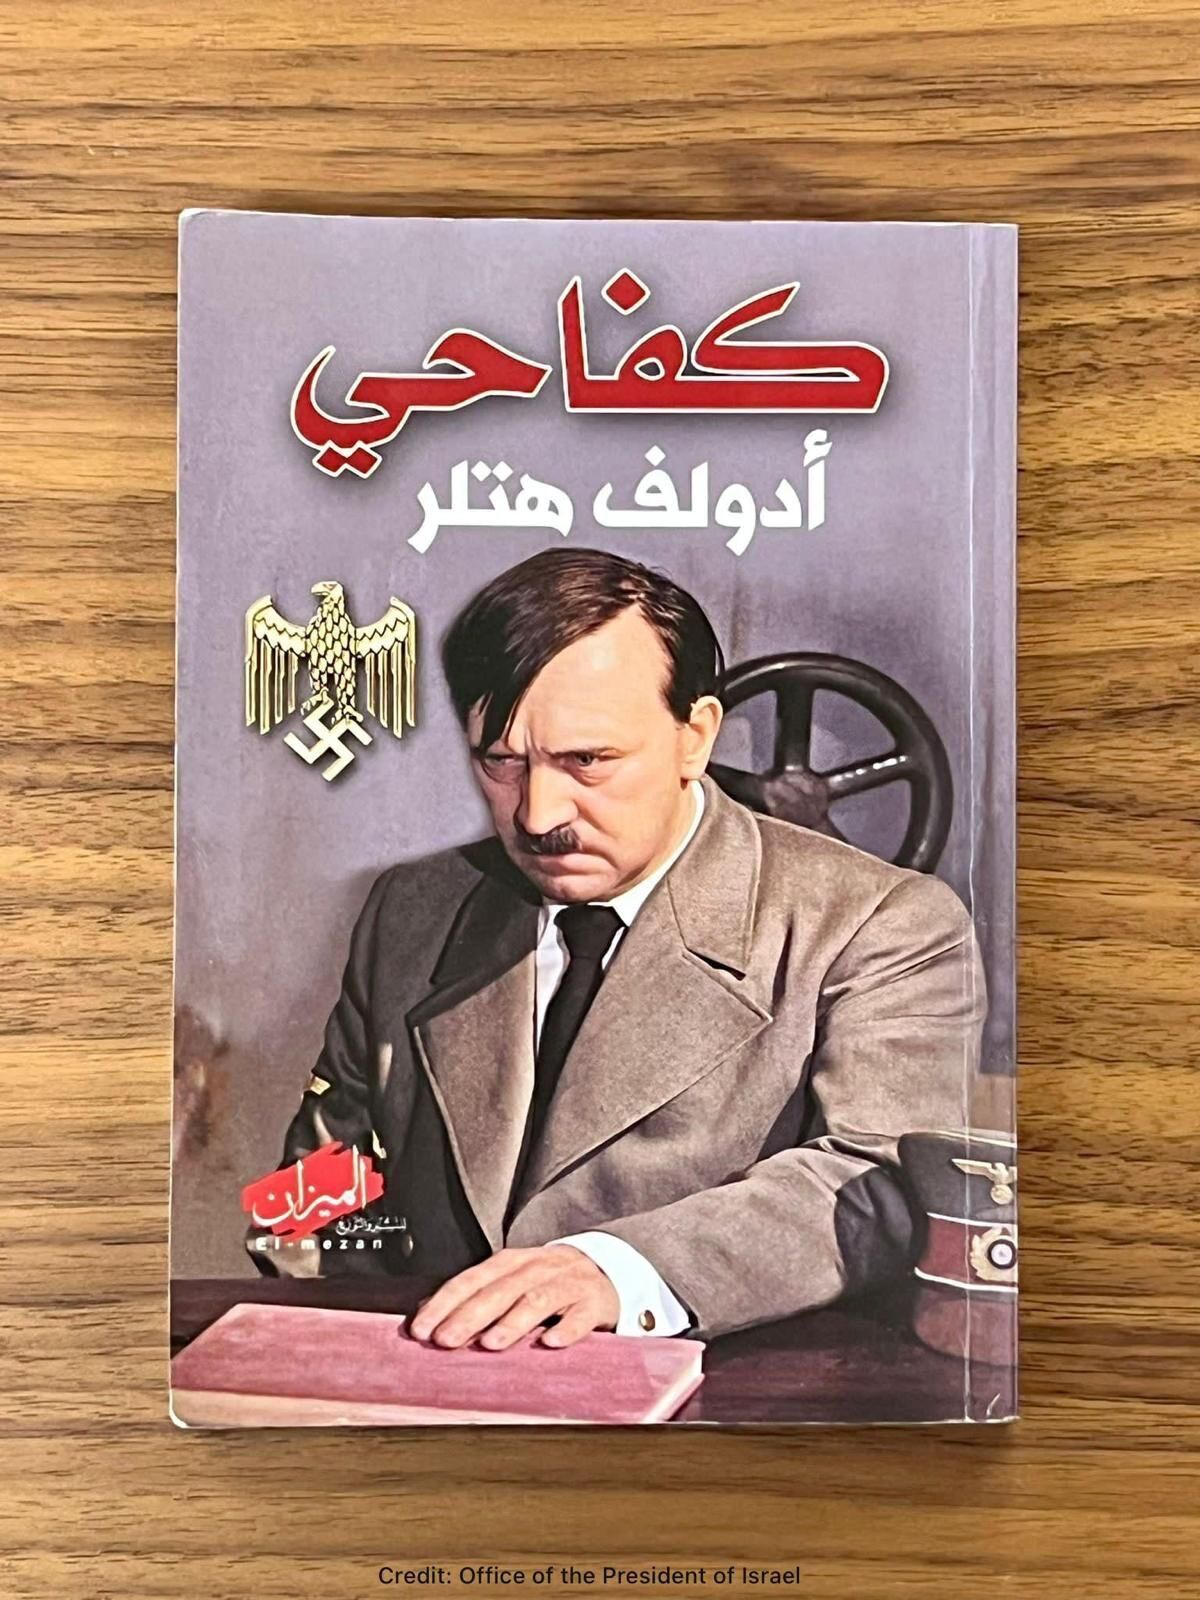 На базе ХАМАС в Газе был найден арабский перевод "Майн Кампф" Гитлера. Фото